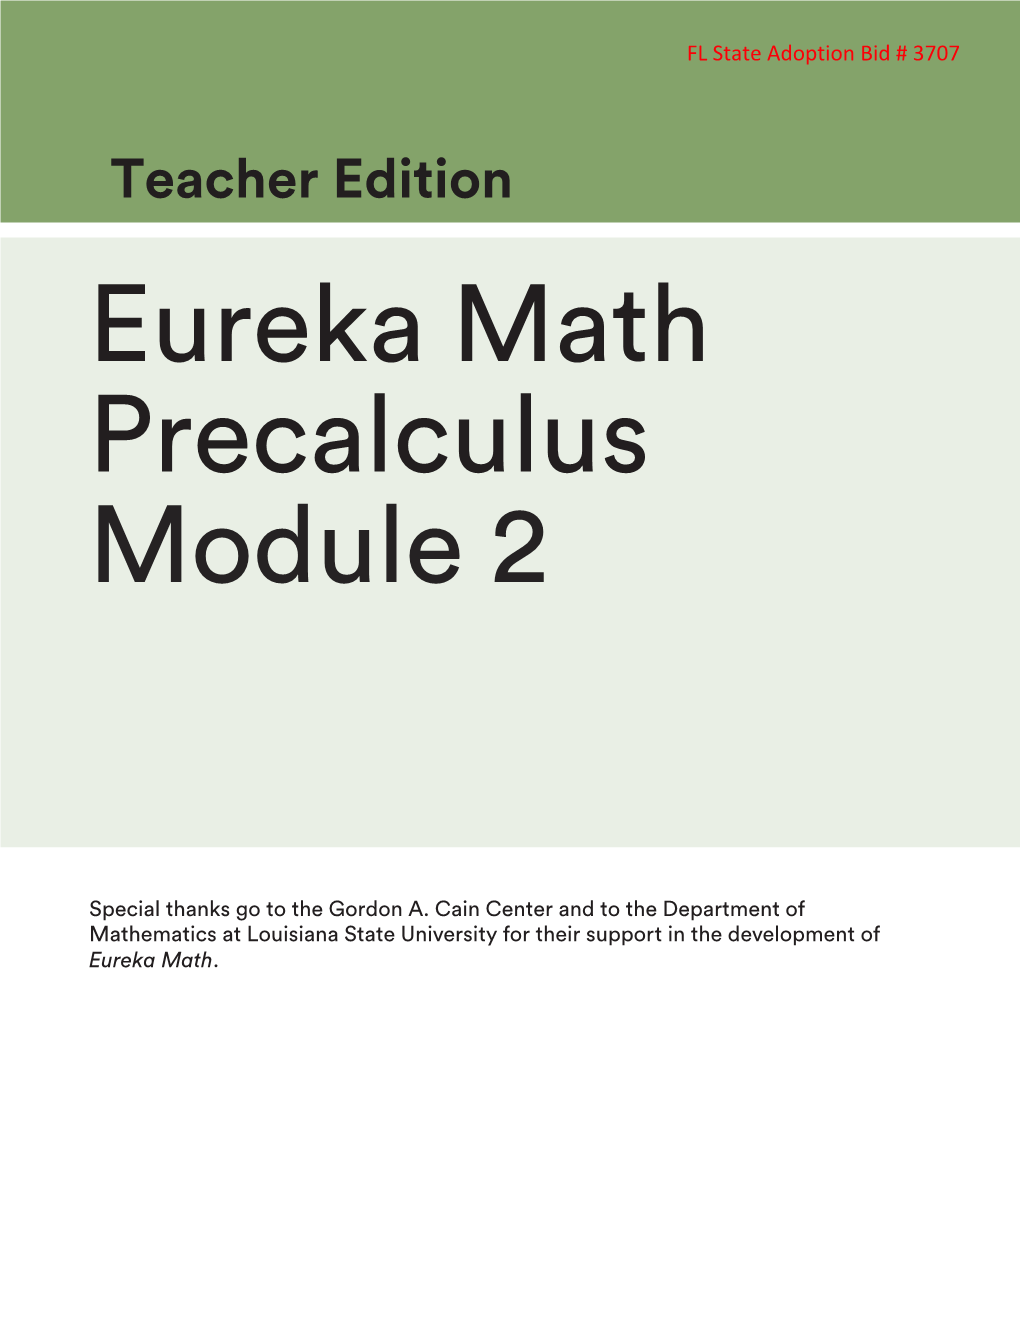 Eureka Math Precalculus Module 2